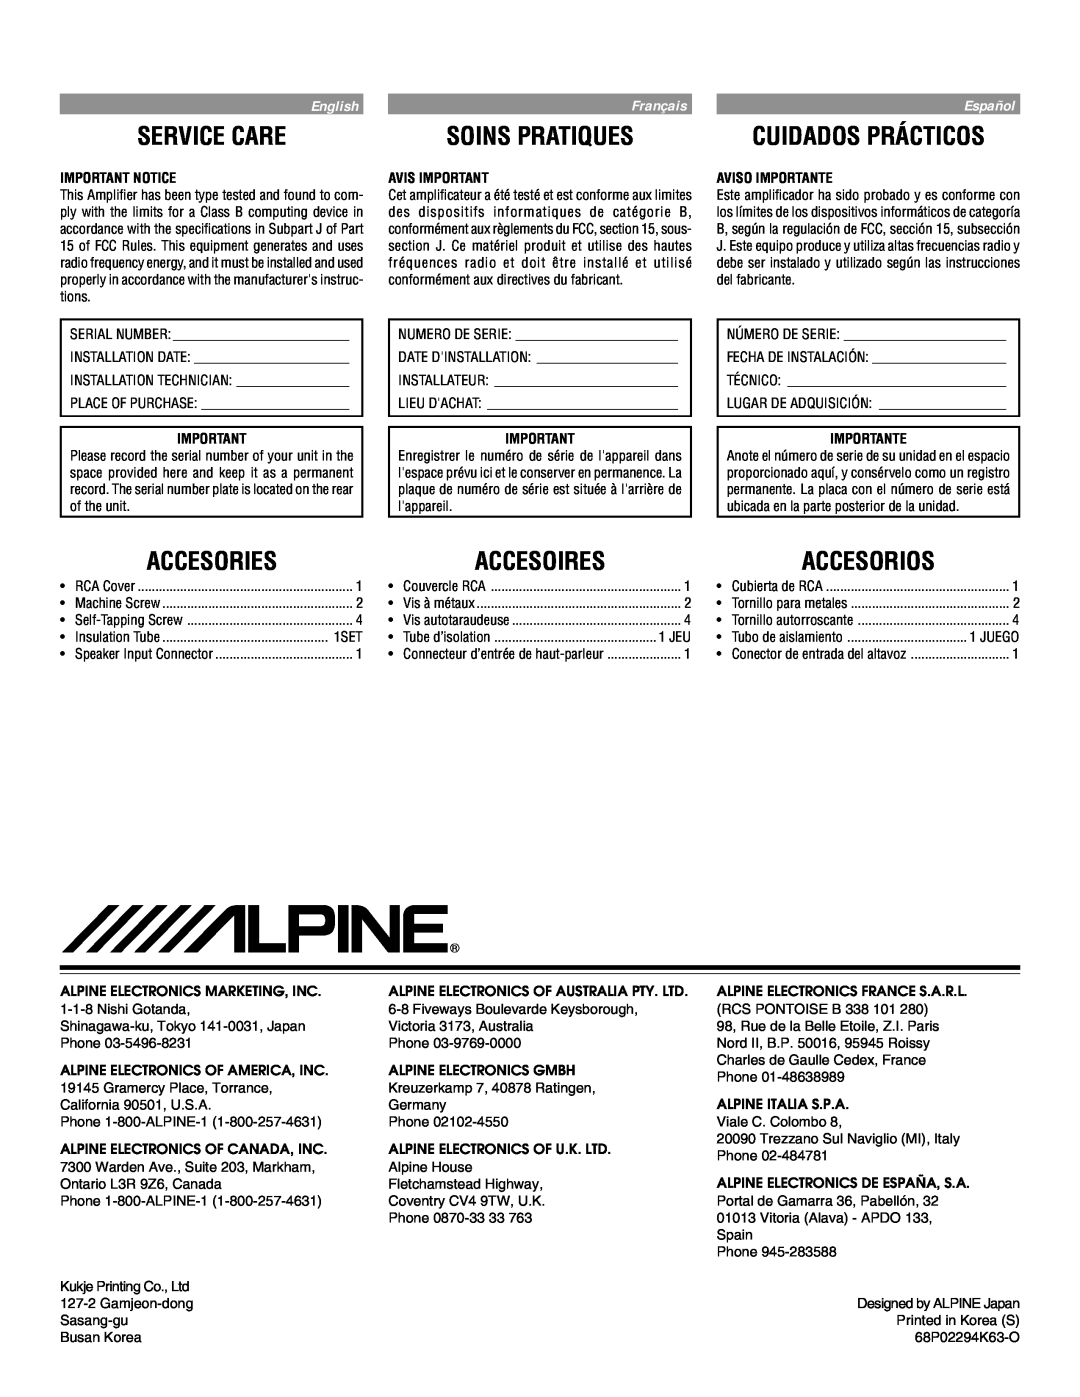 Alpine MRP-M350 Service Care, Soins Pratiques, Cuidados Prácticos, Accesories, Accesoires, Accesorios, English, Français 